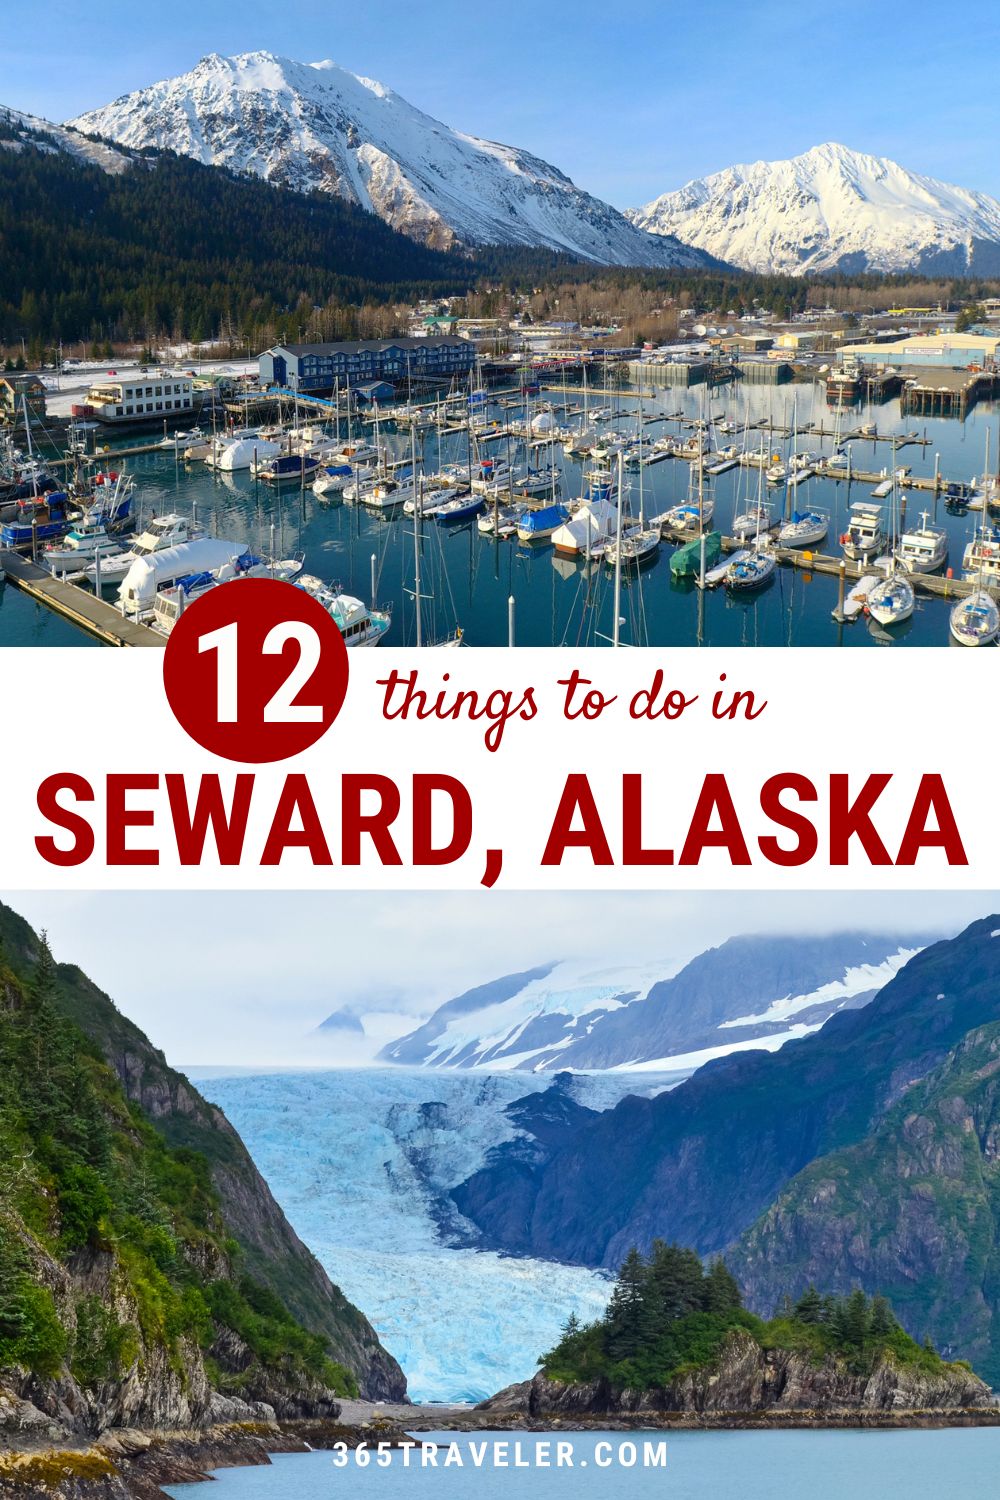 12 ABSOLUTE BEST THINGS TO DO IN SEWARD ALASKA